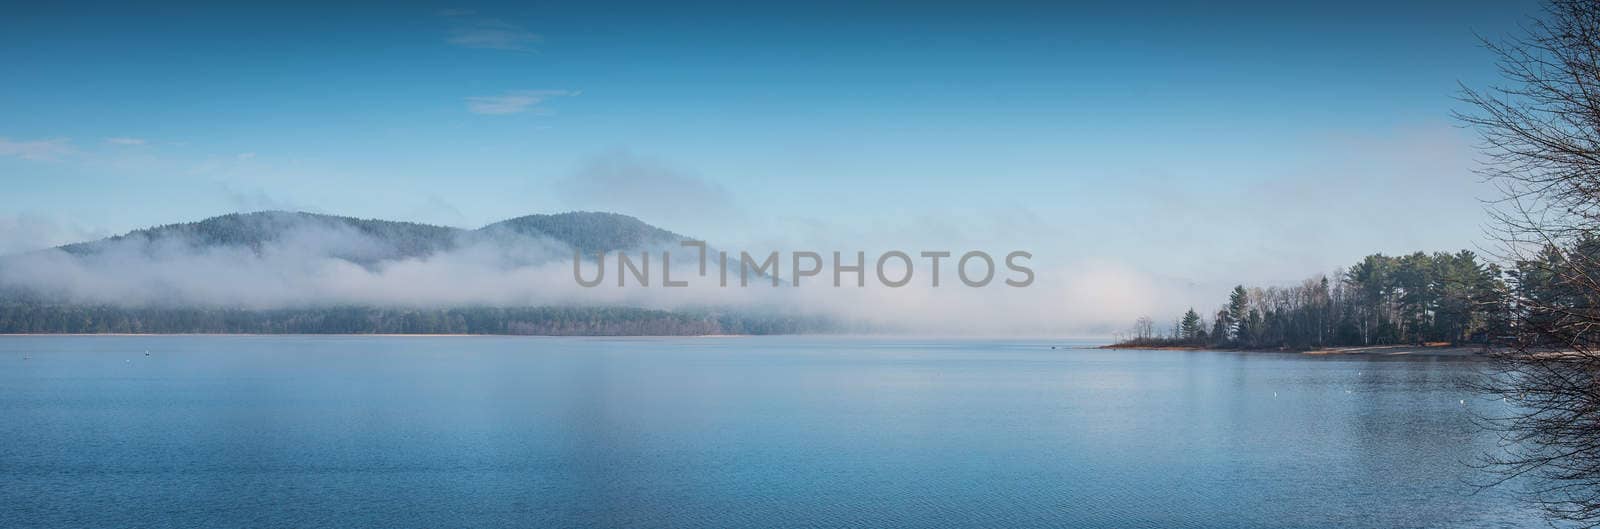 Panoramic - split blue horizon.  Fog lifting off the Ottawa River. by valleyboi63